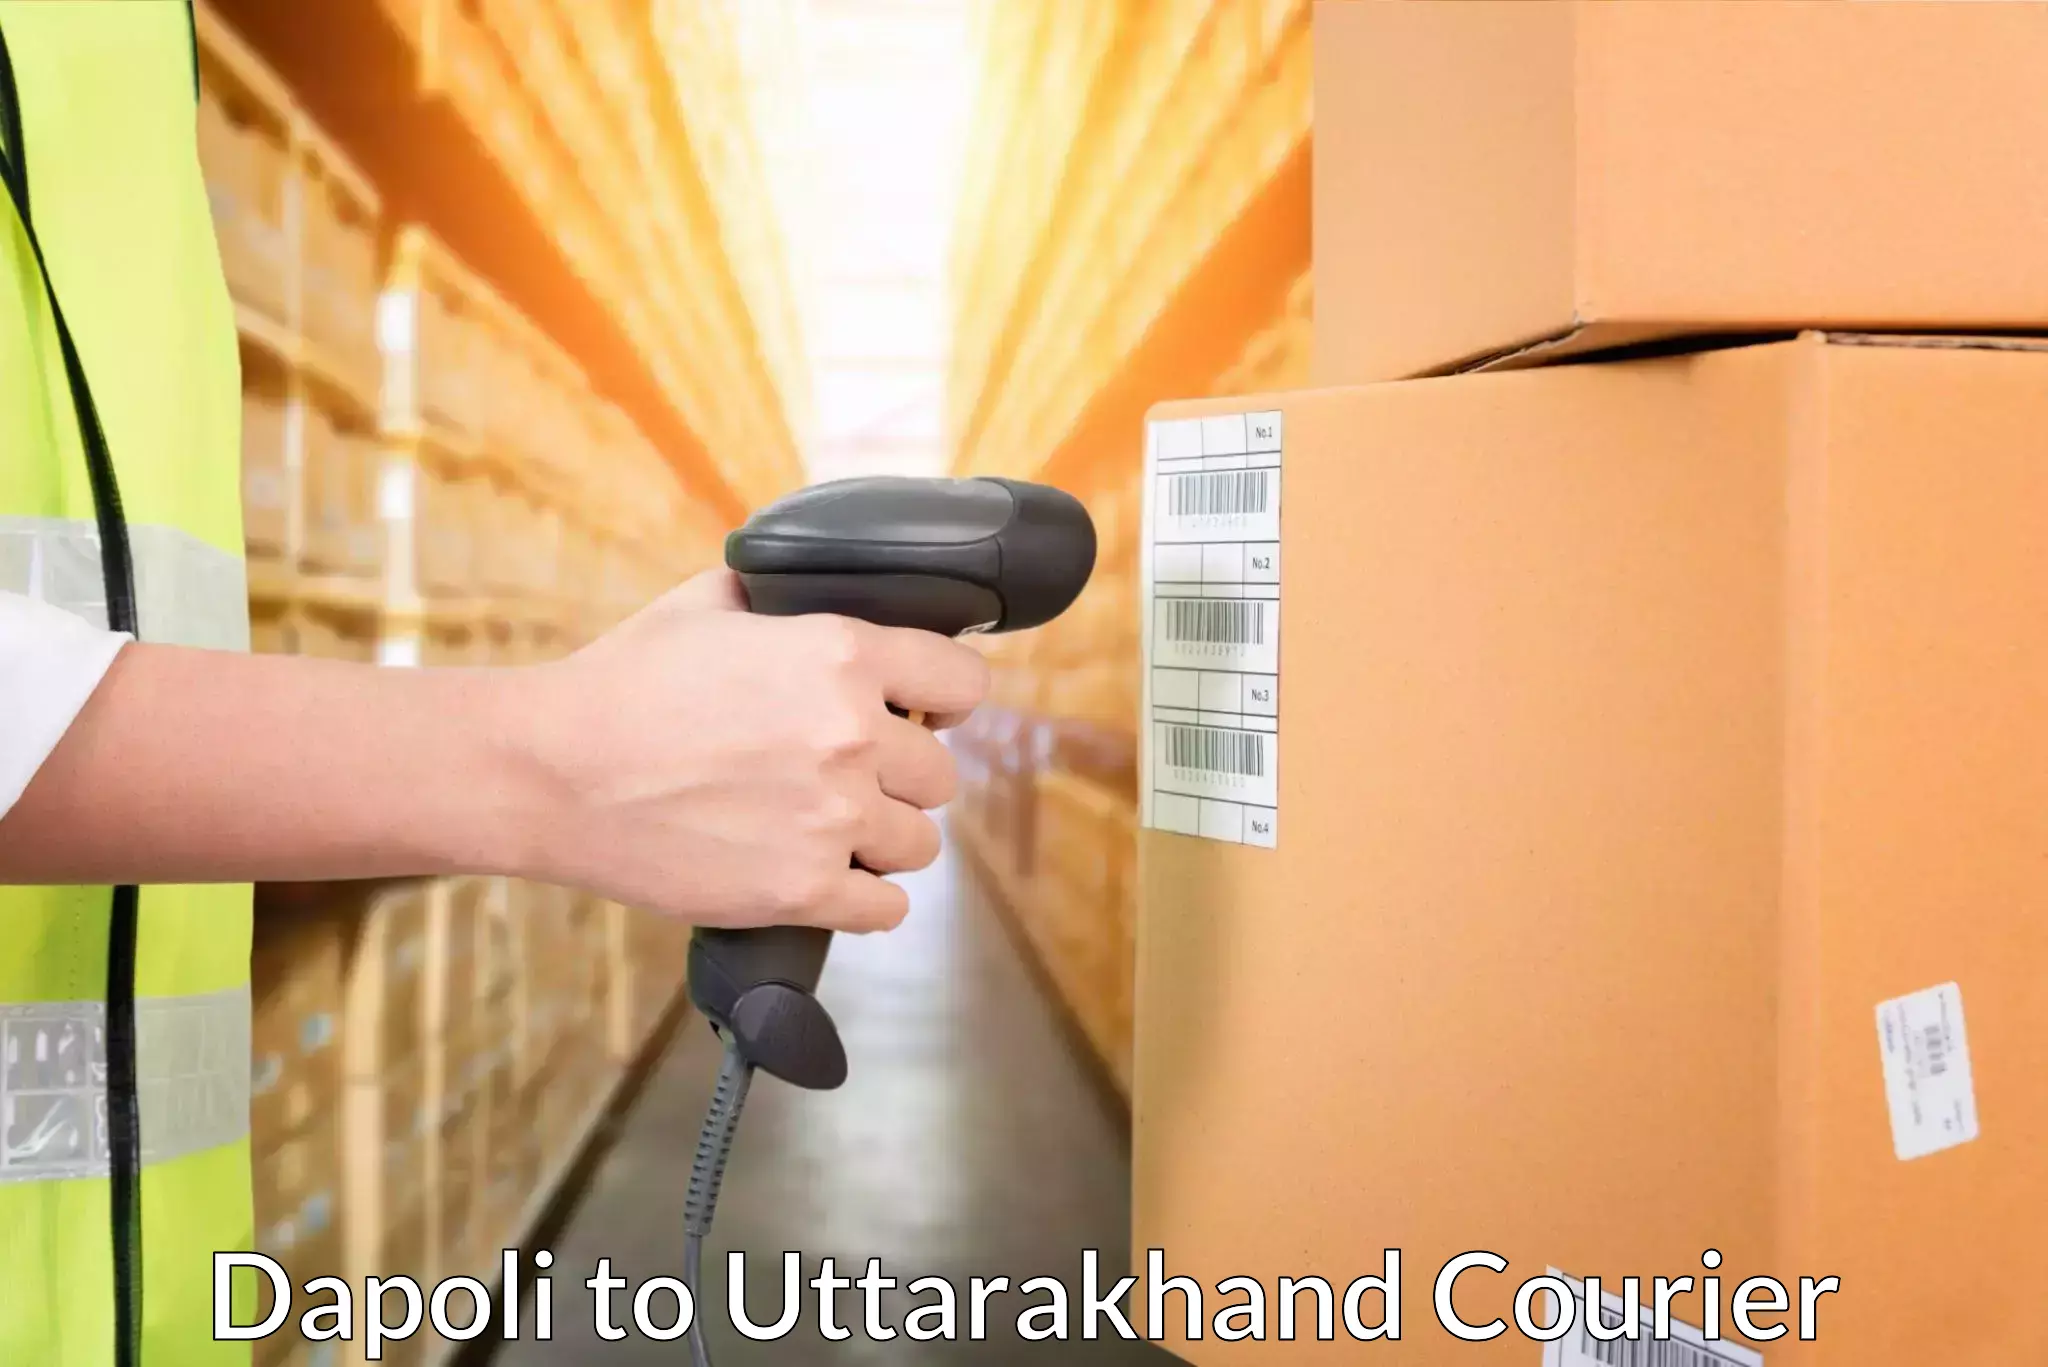 Seamless shipping experience Dapoli to Uttarakhand